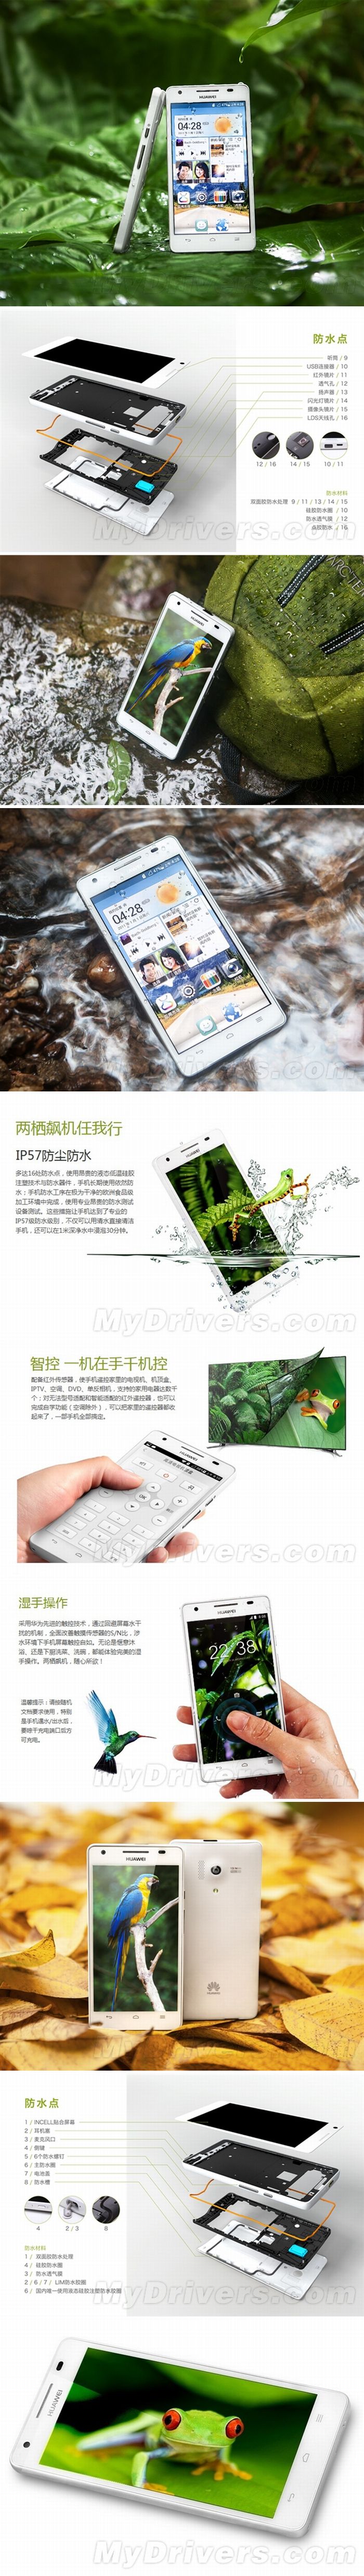 Itt a vízálló Huawei Honor 3